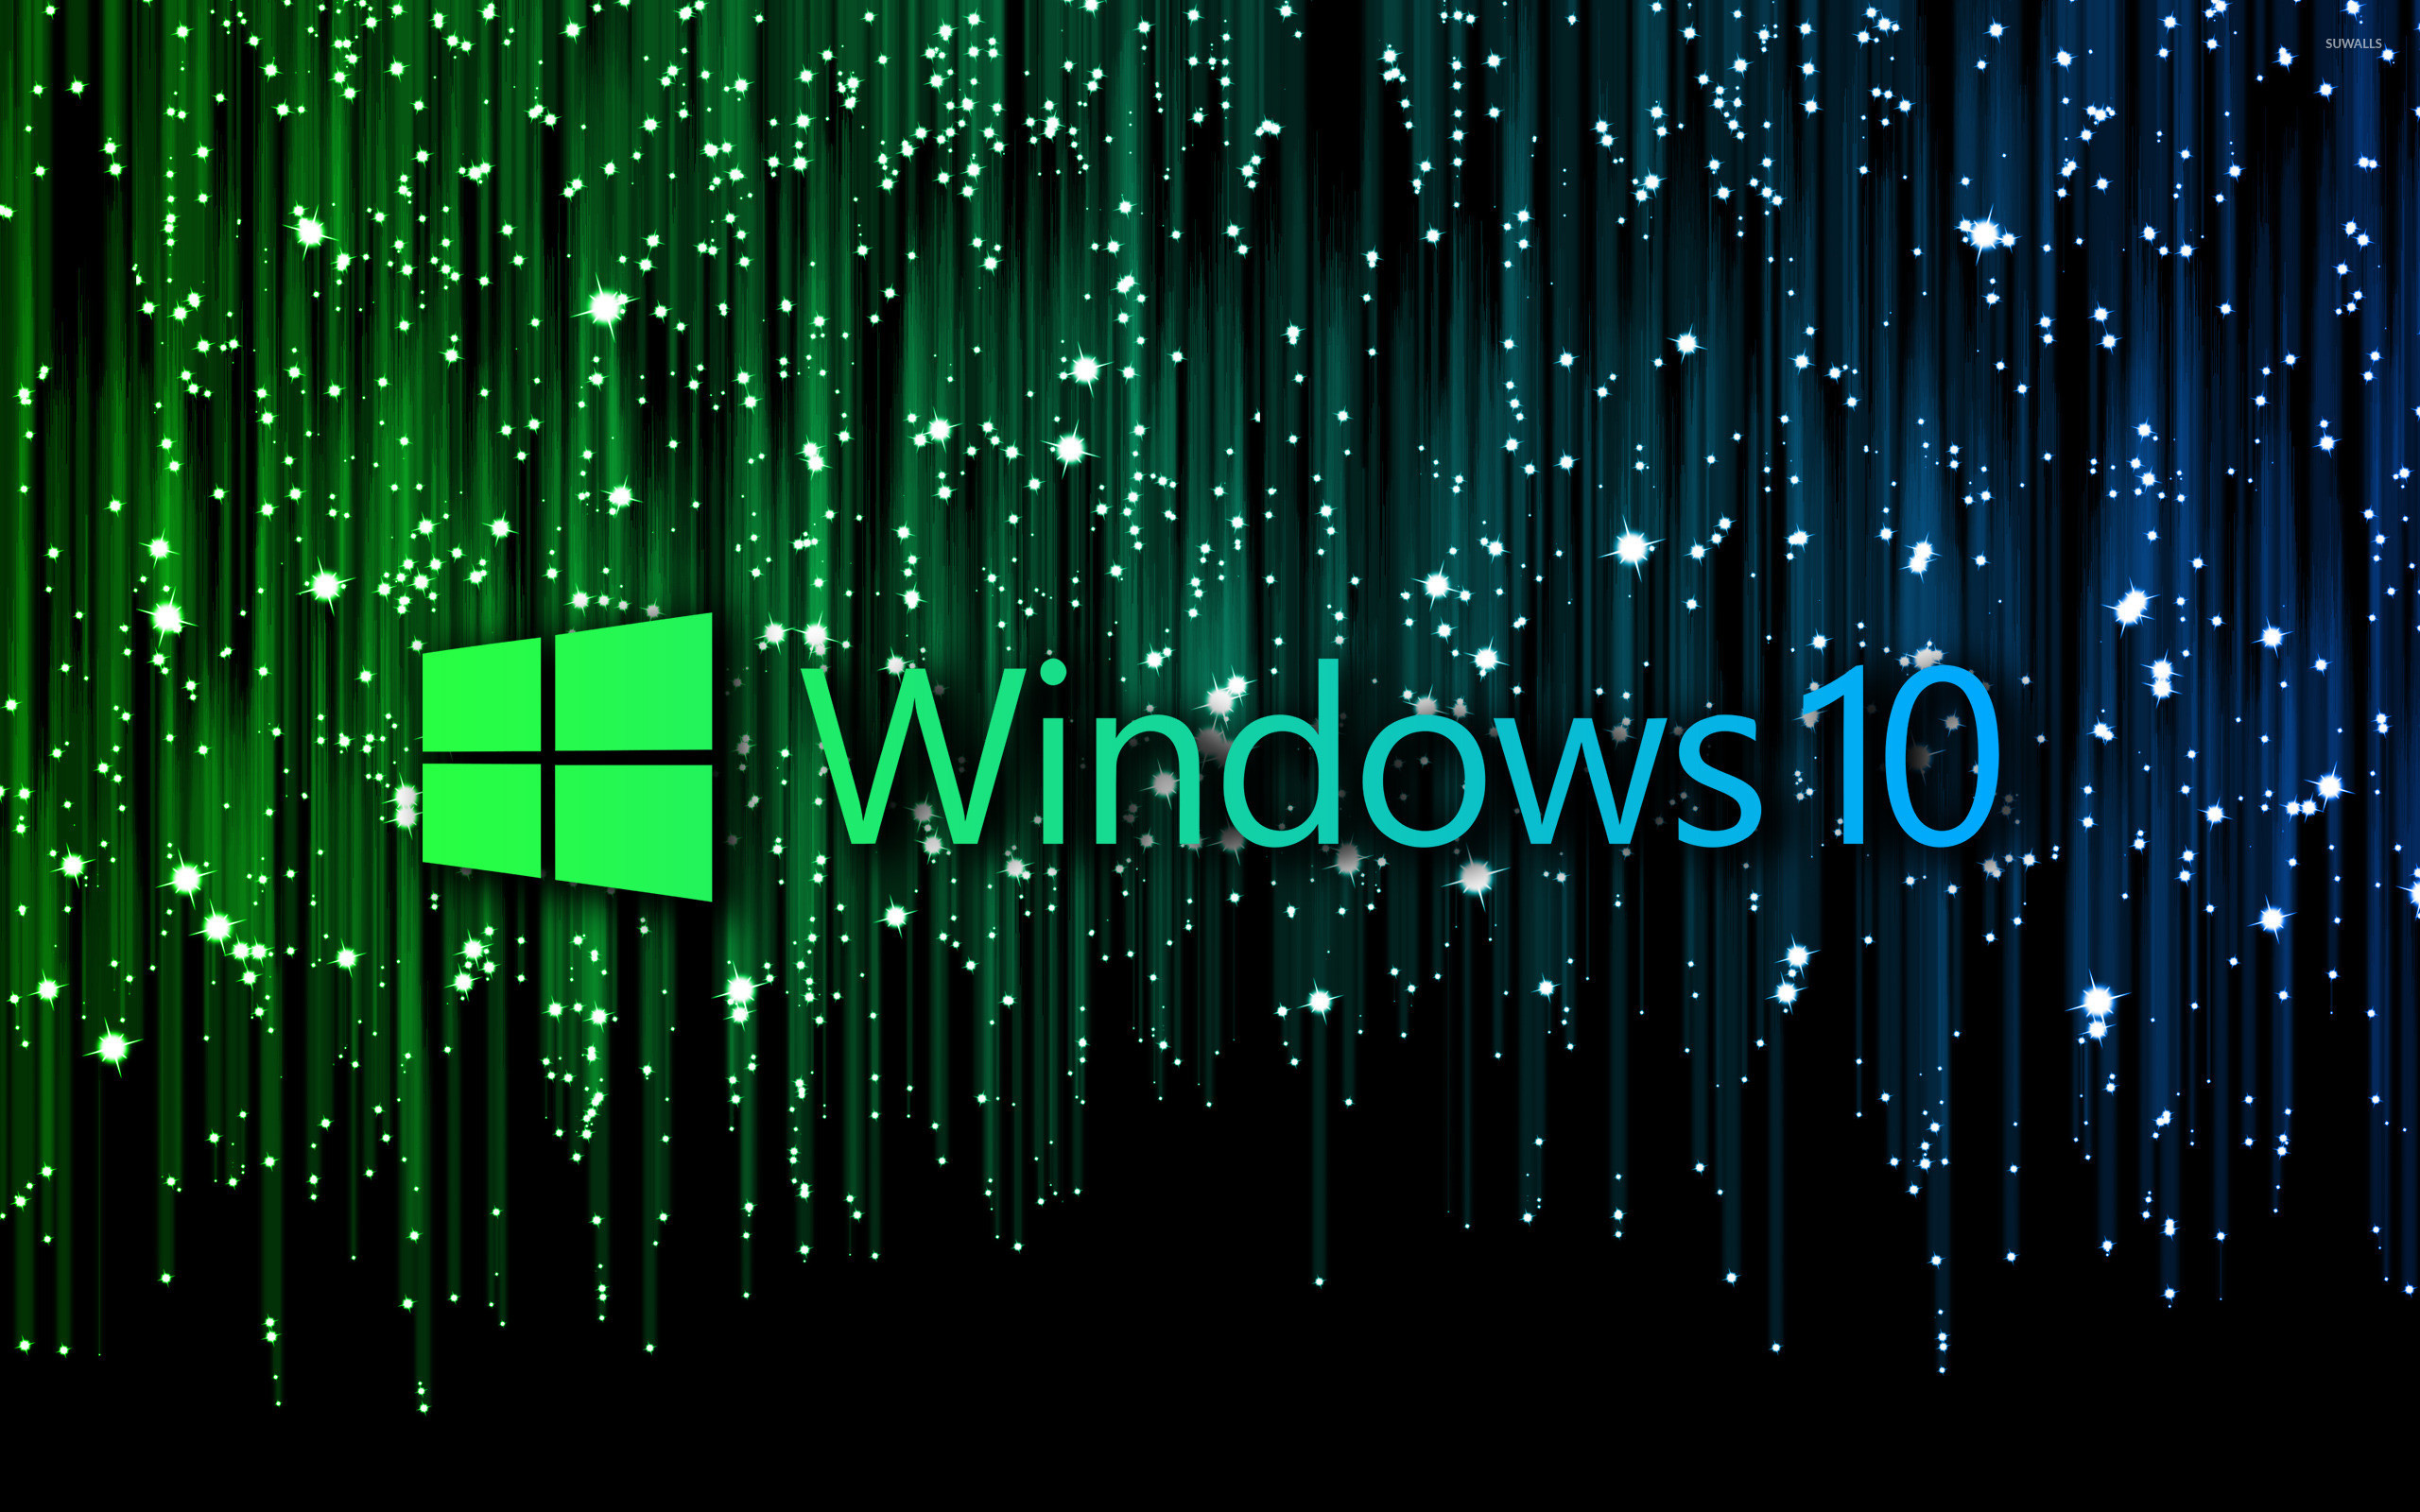 2560x1600 Windows 10 text logo on meteor shower wallpaper